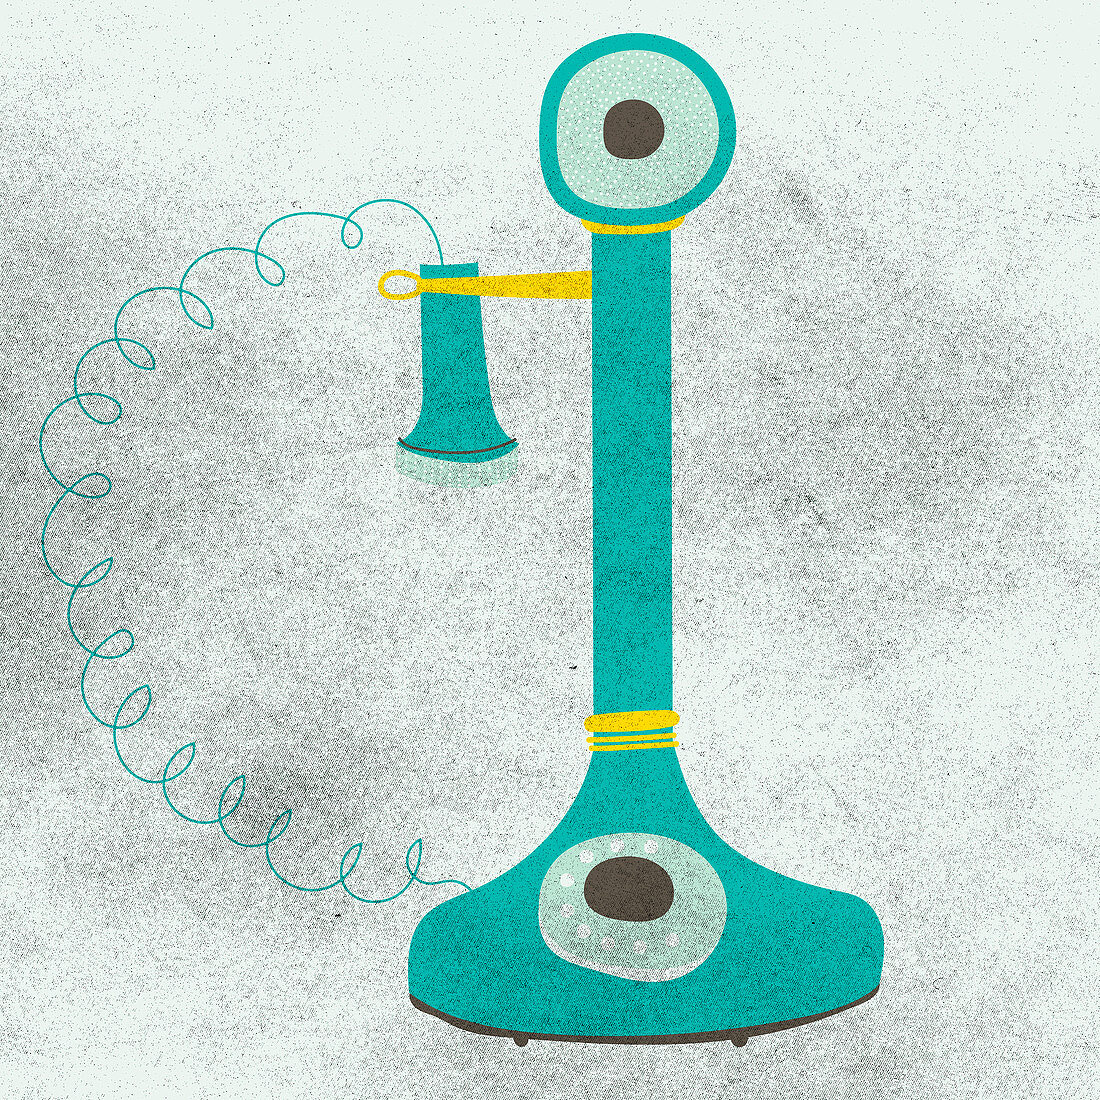 Old-fashioned candlestick telephone, illustration